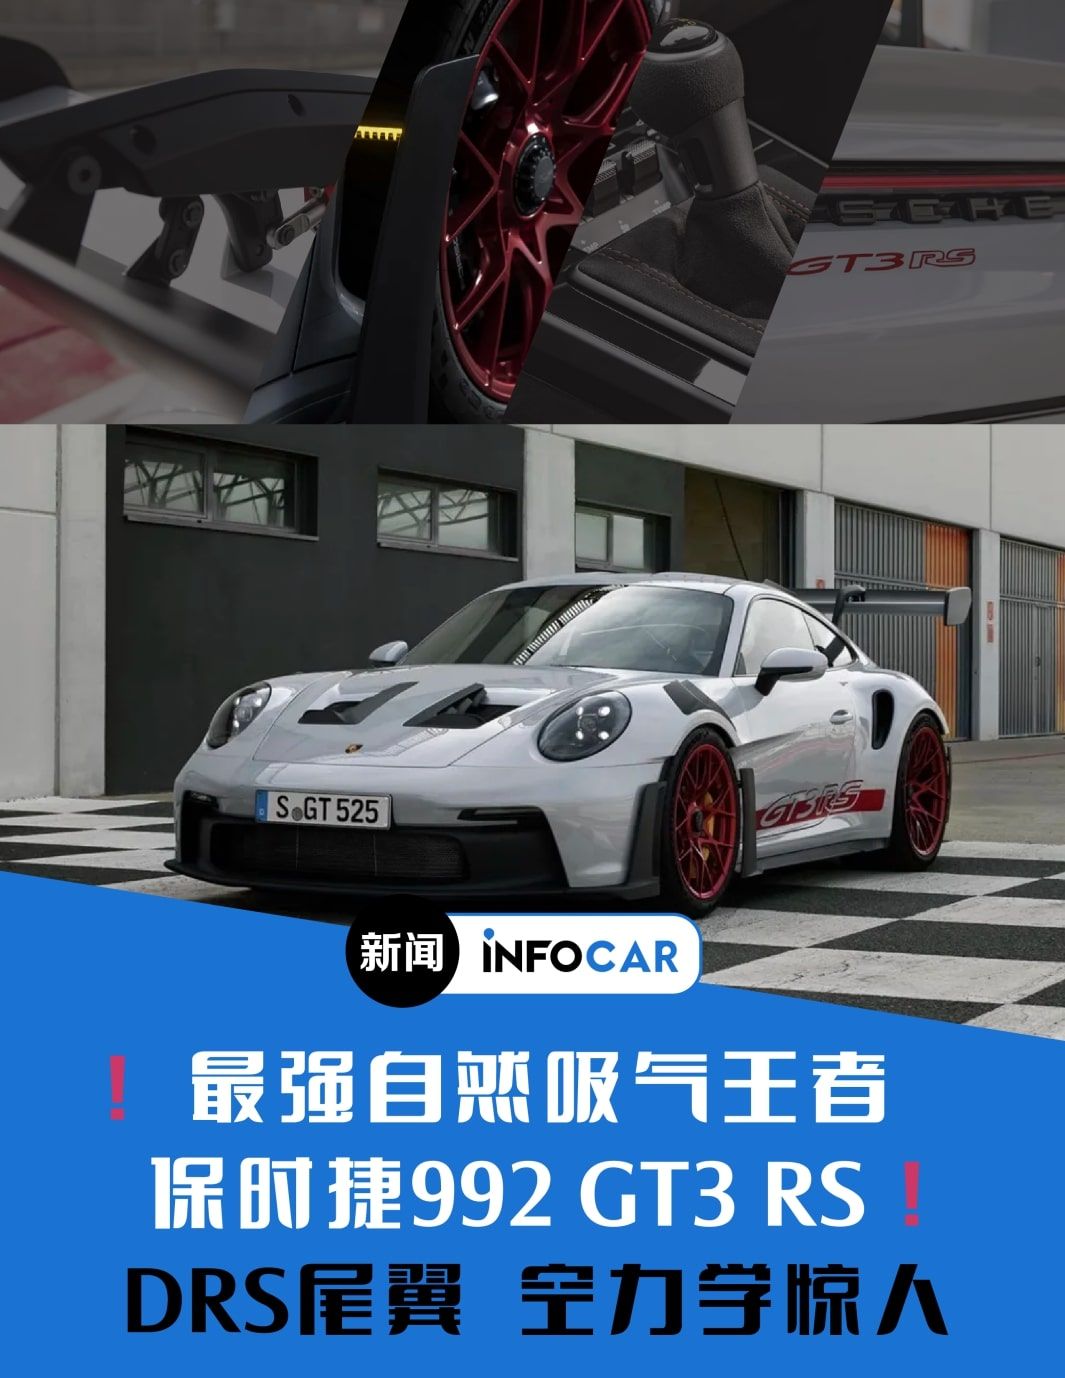 Infocar -INFOCAR车闻：最强自然吸气王者 保时捷992 GT3 RS